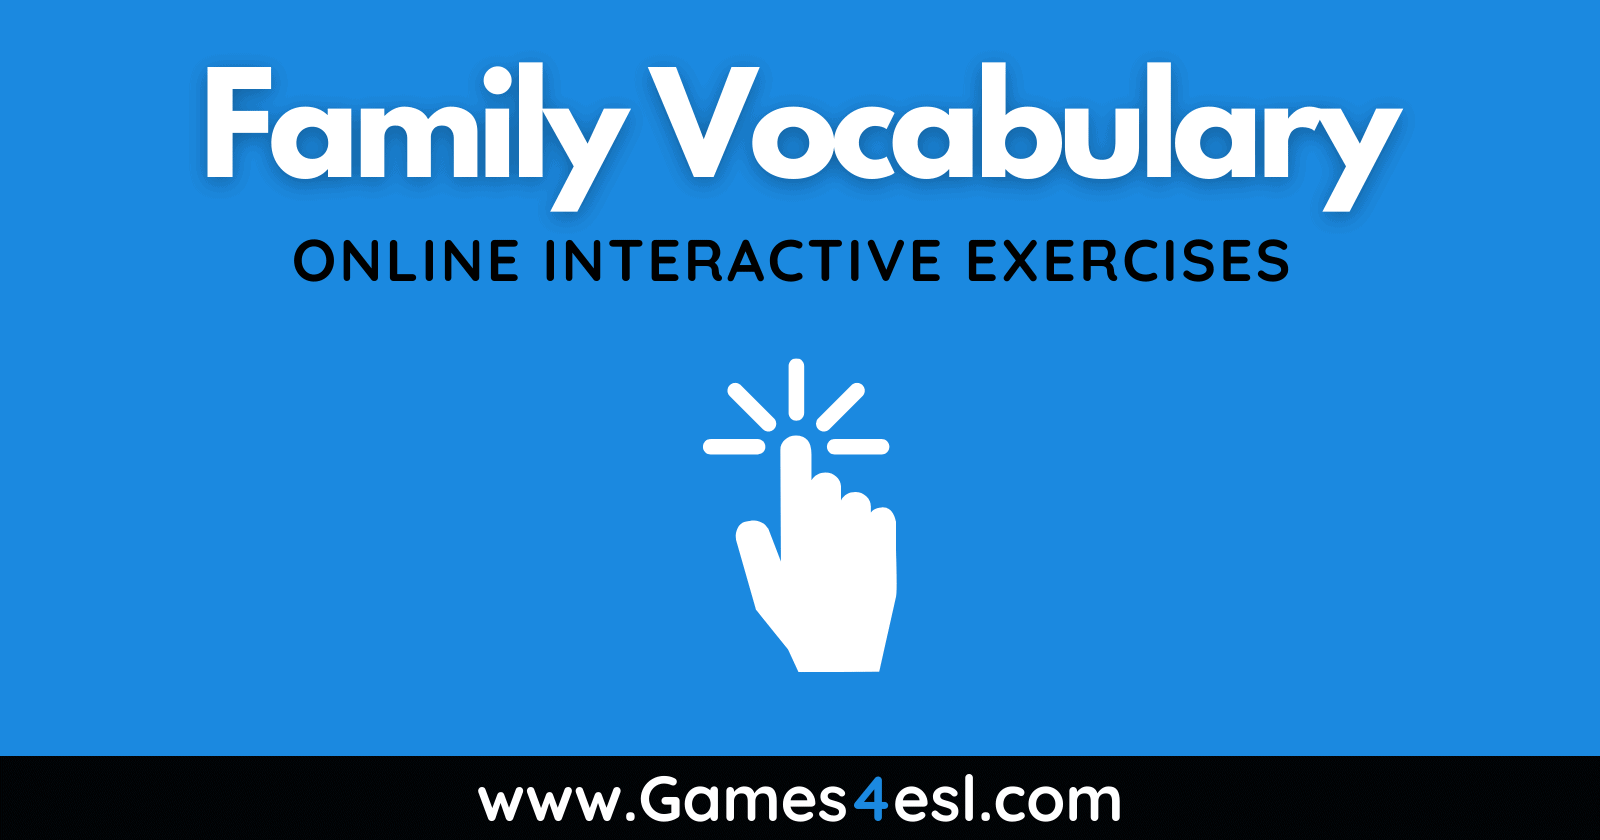 Family Vocabulary Exercises